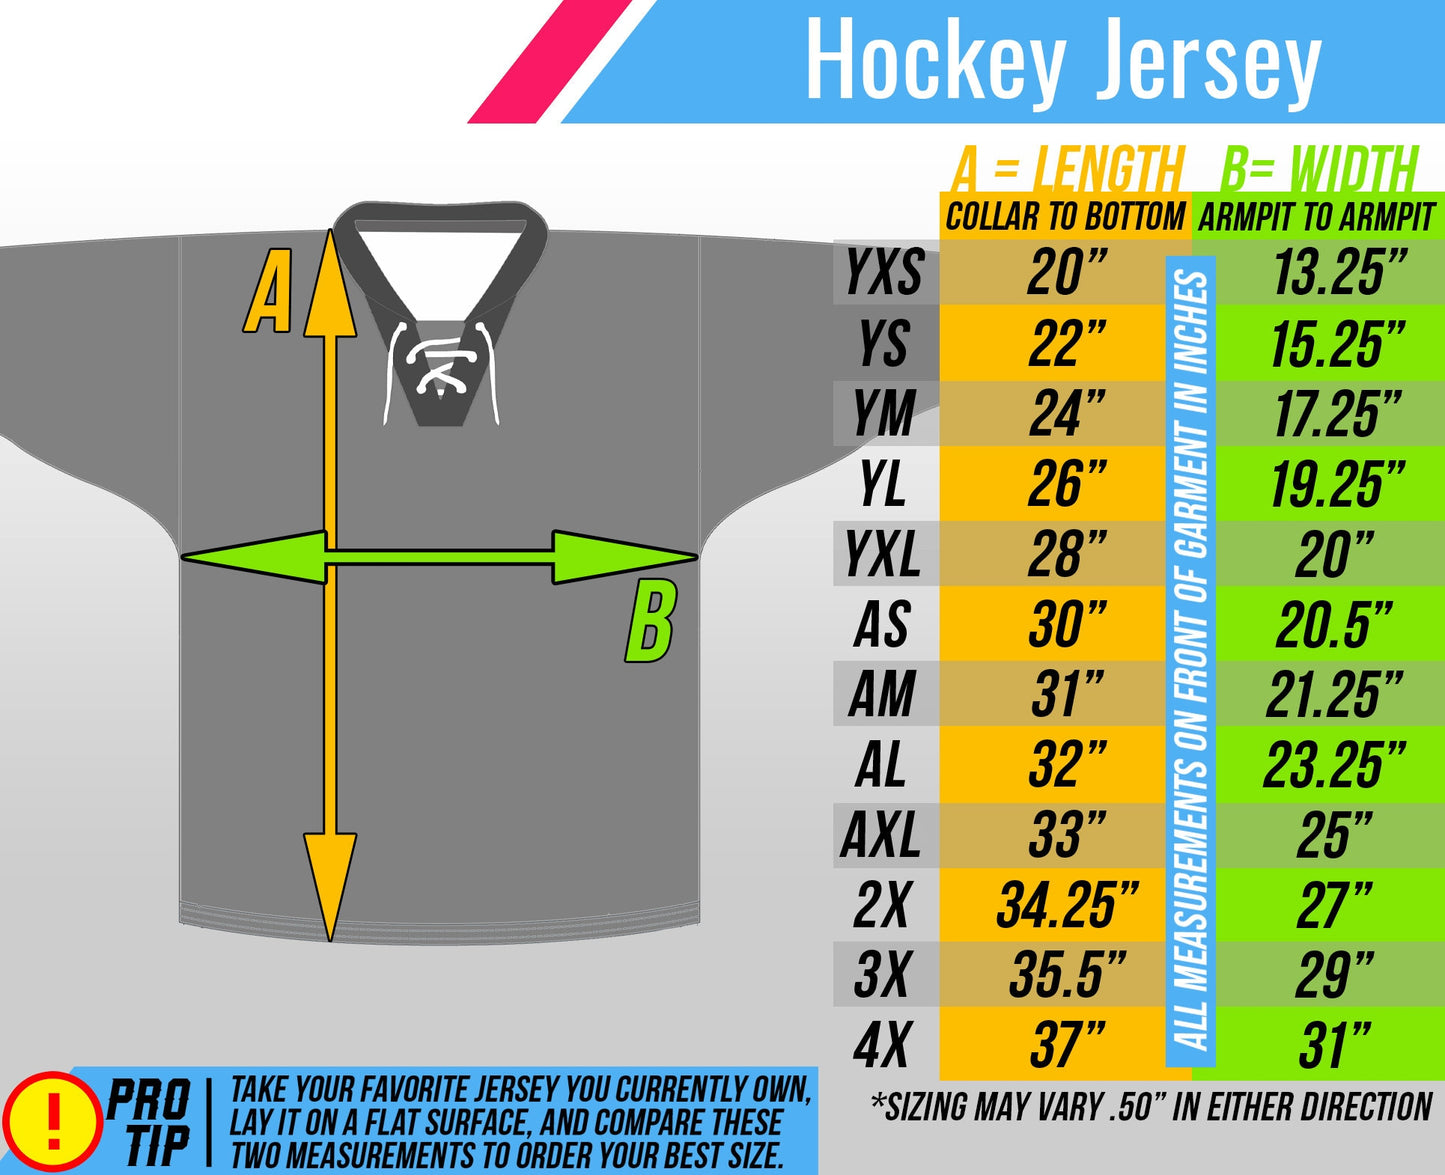 Paz Vizsla Bounty Hunters Din Djarin Hockey Jersey Sweater *CUSTOM*